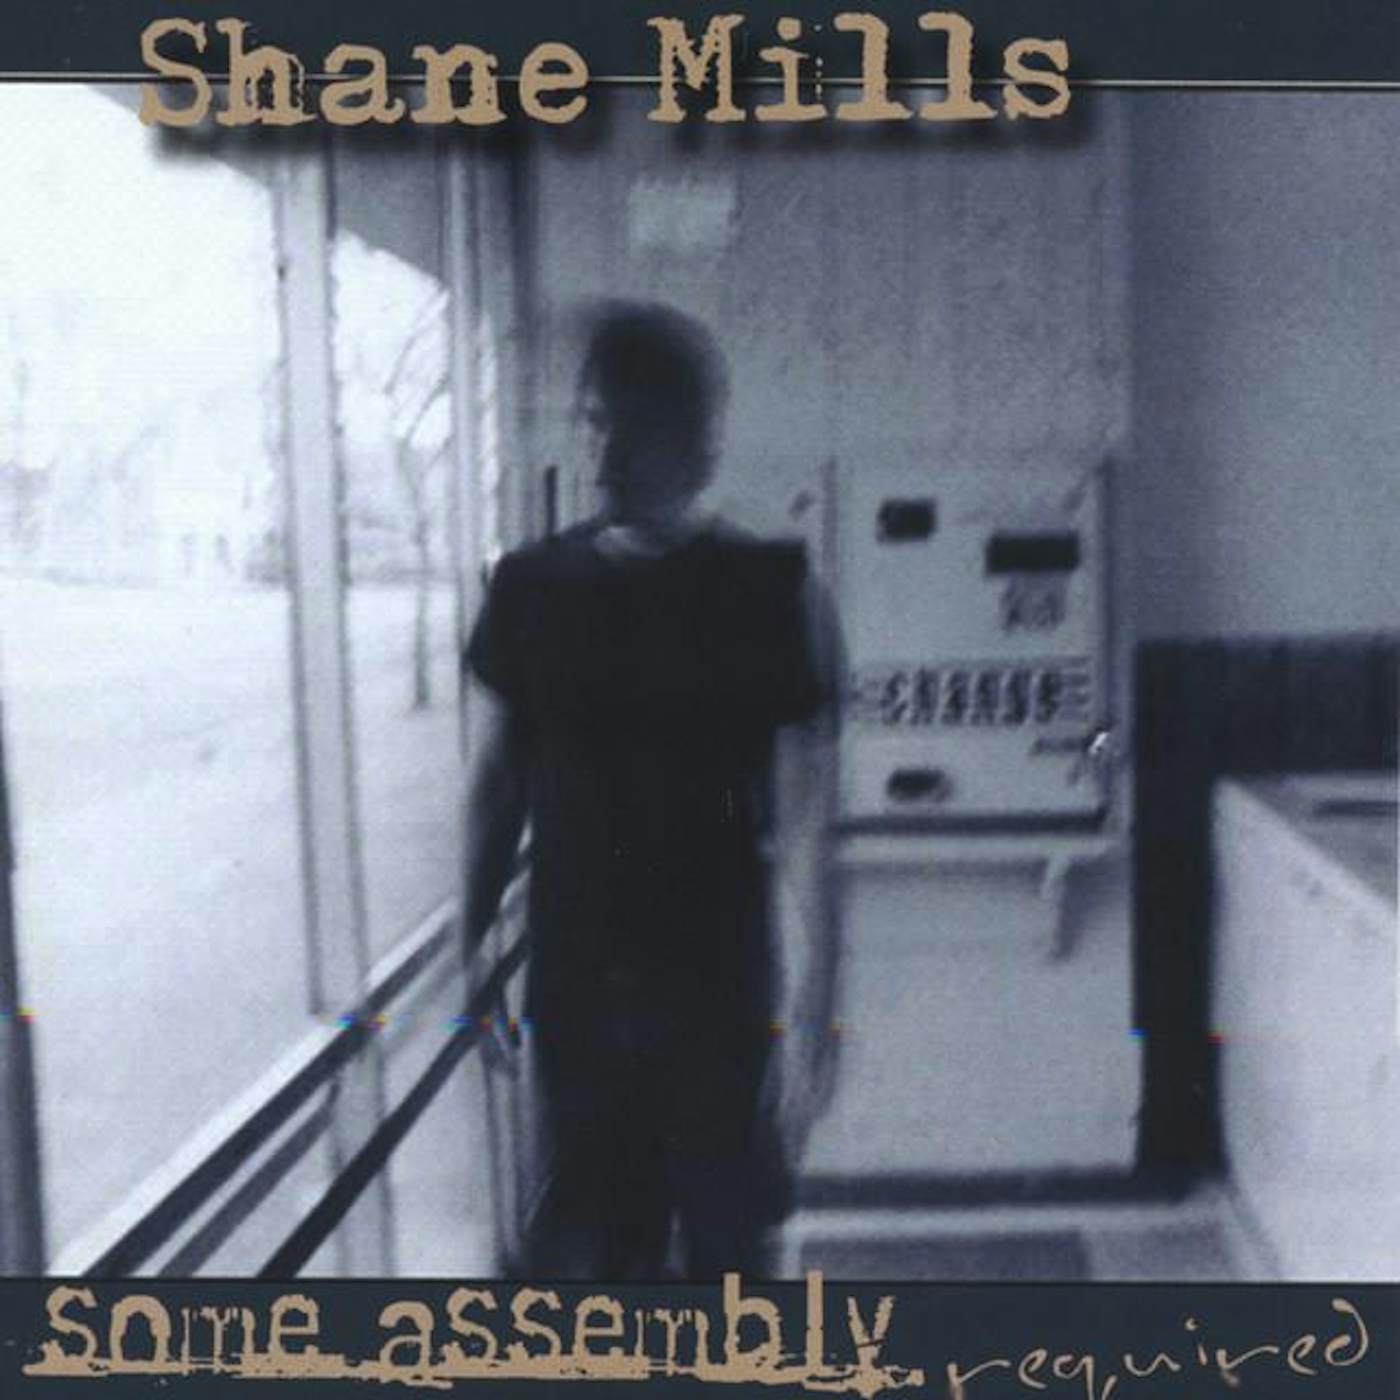 Shane Mills